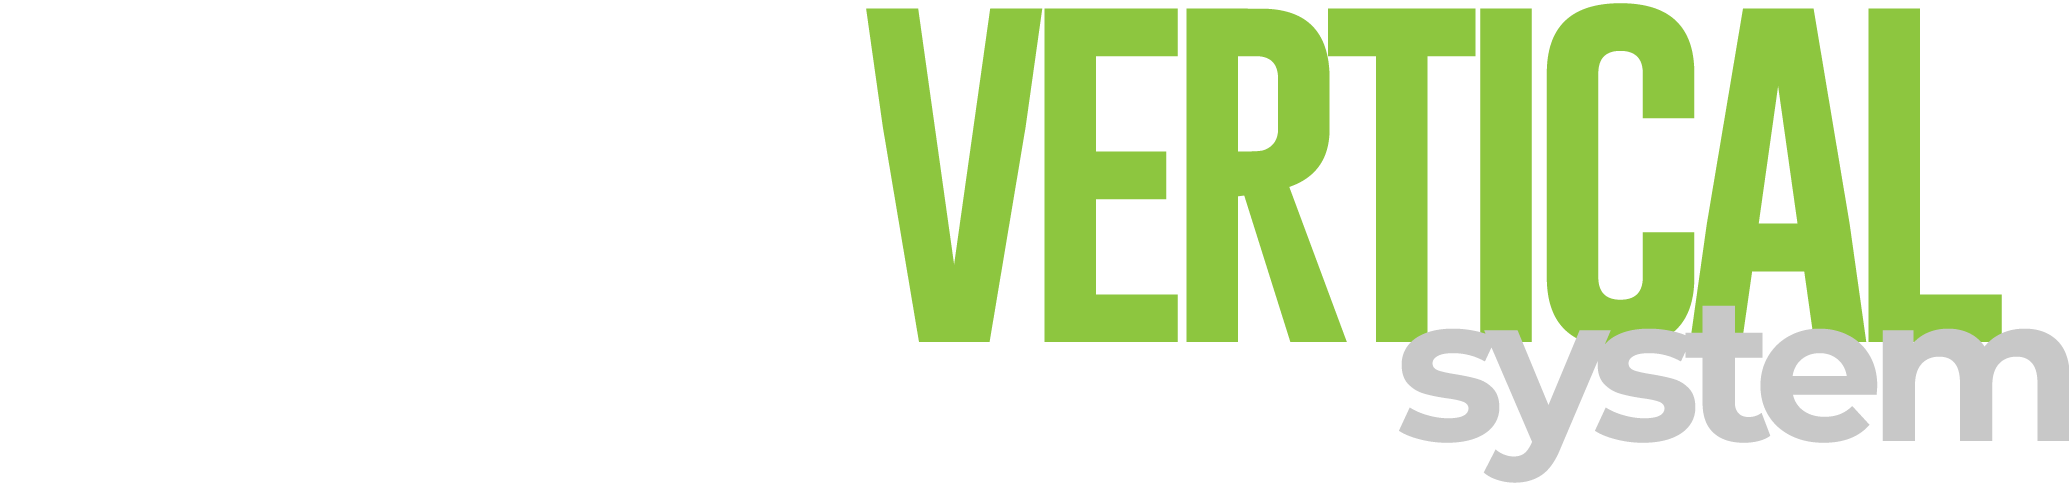 Green vertical system logo - 350x84